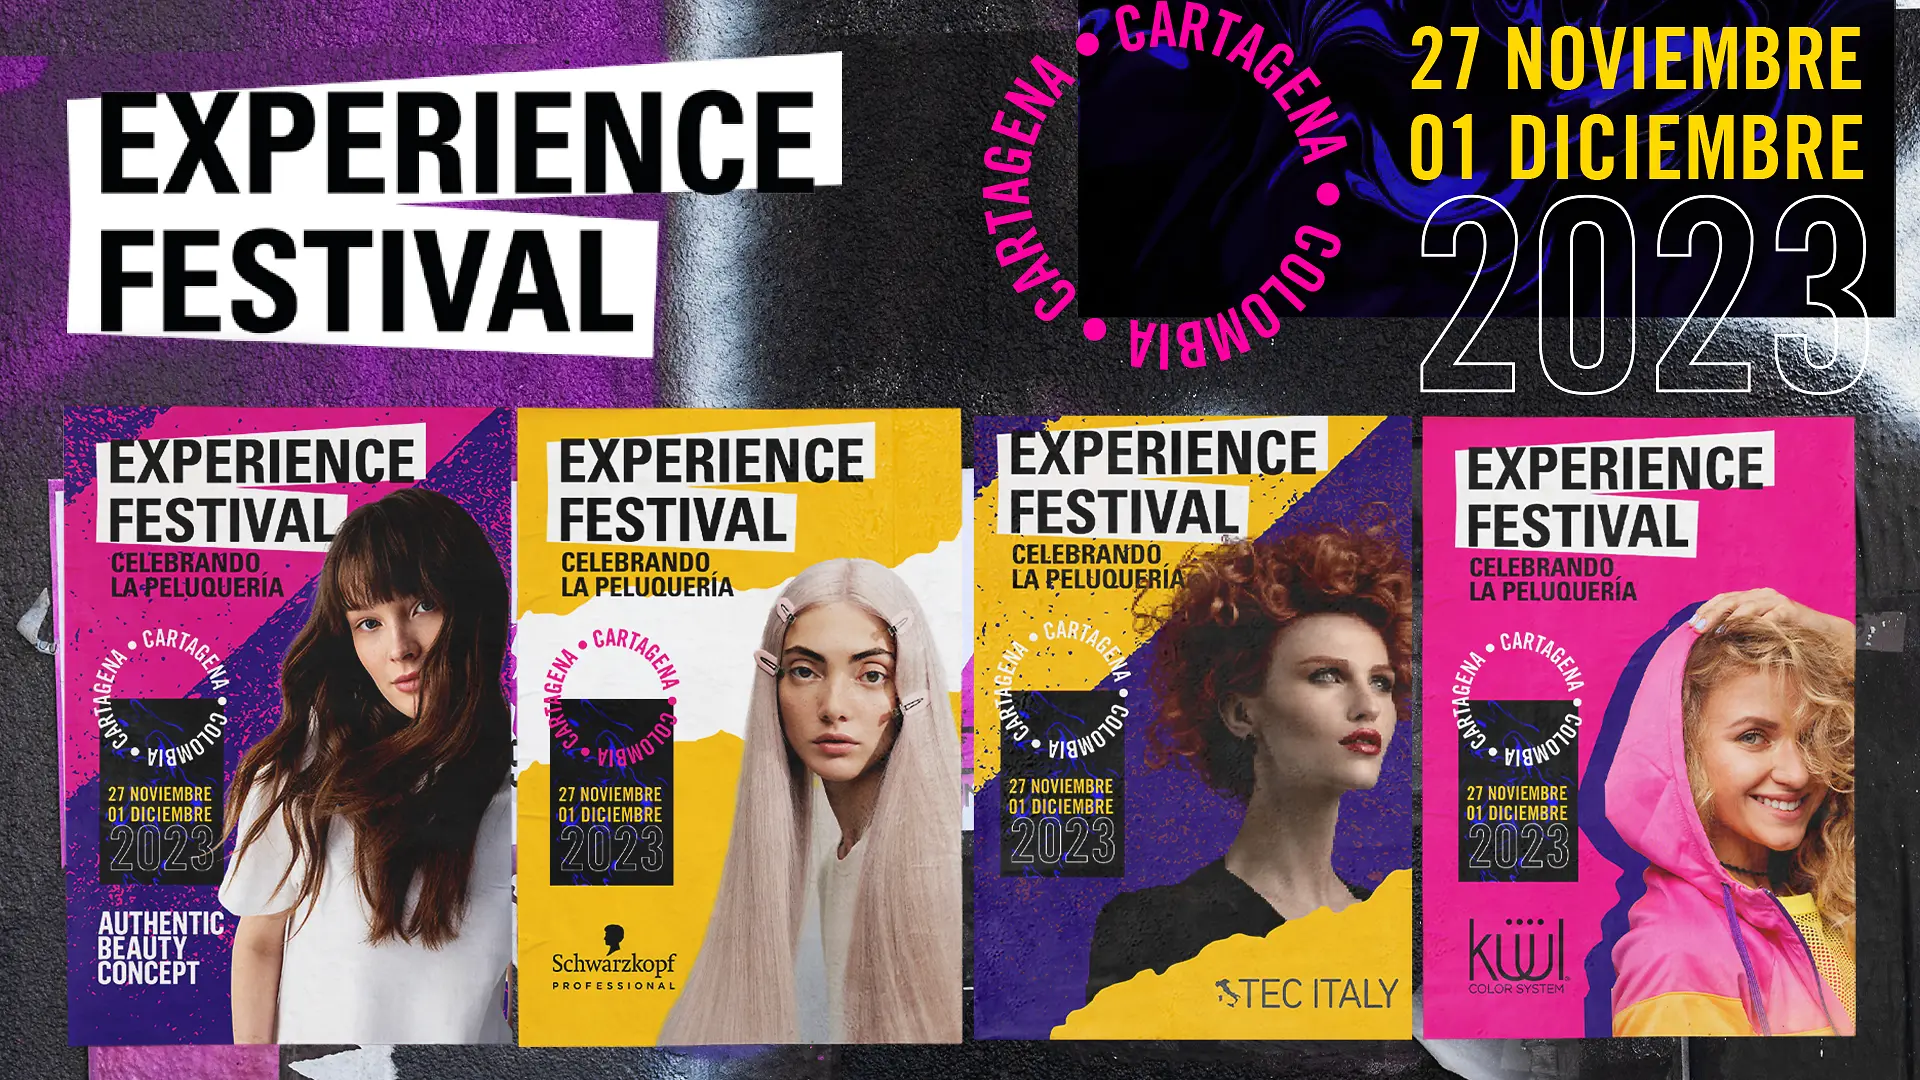 Imagen promocional del Experience Festival